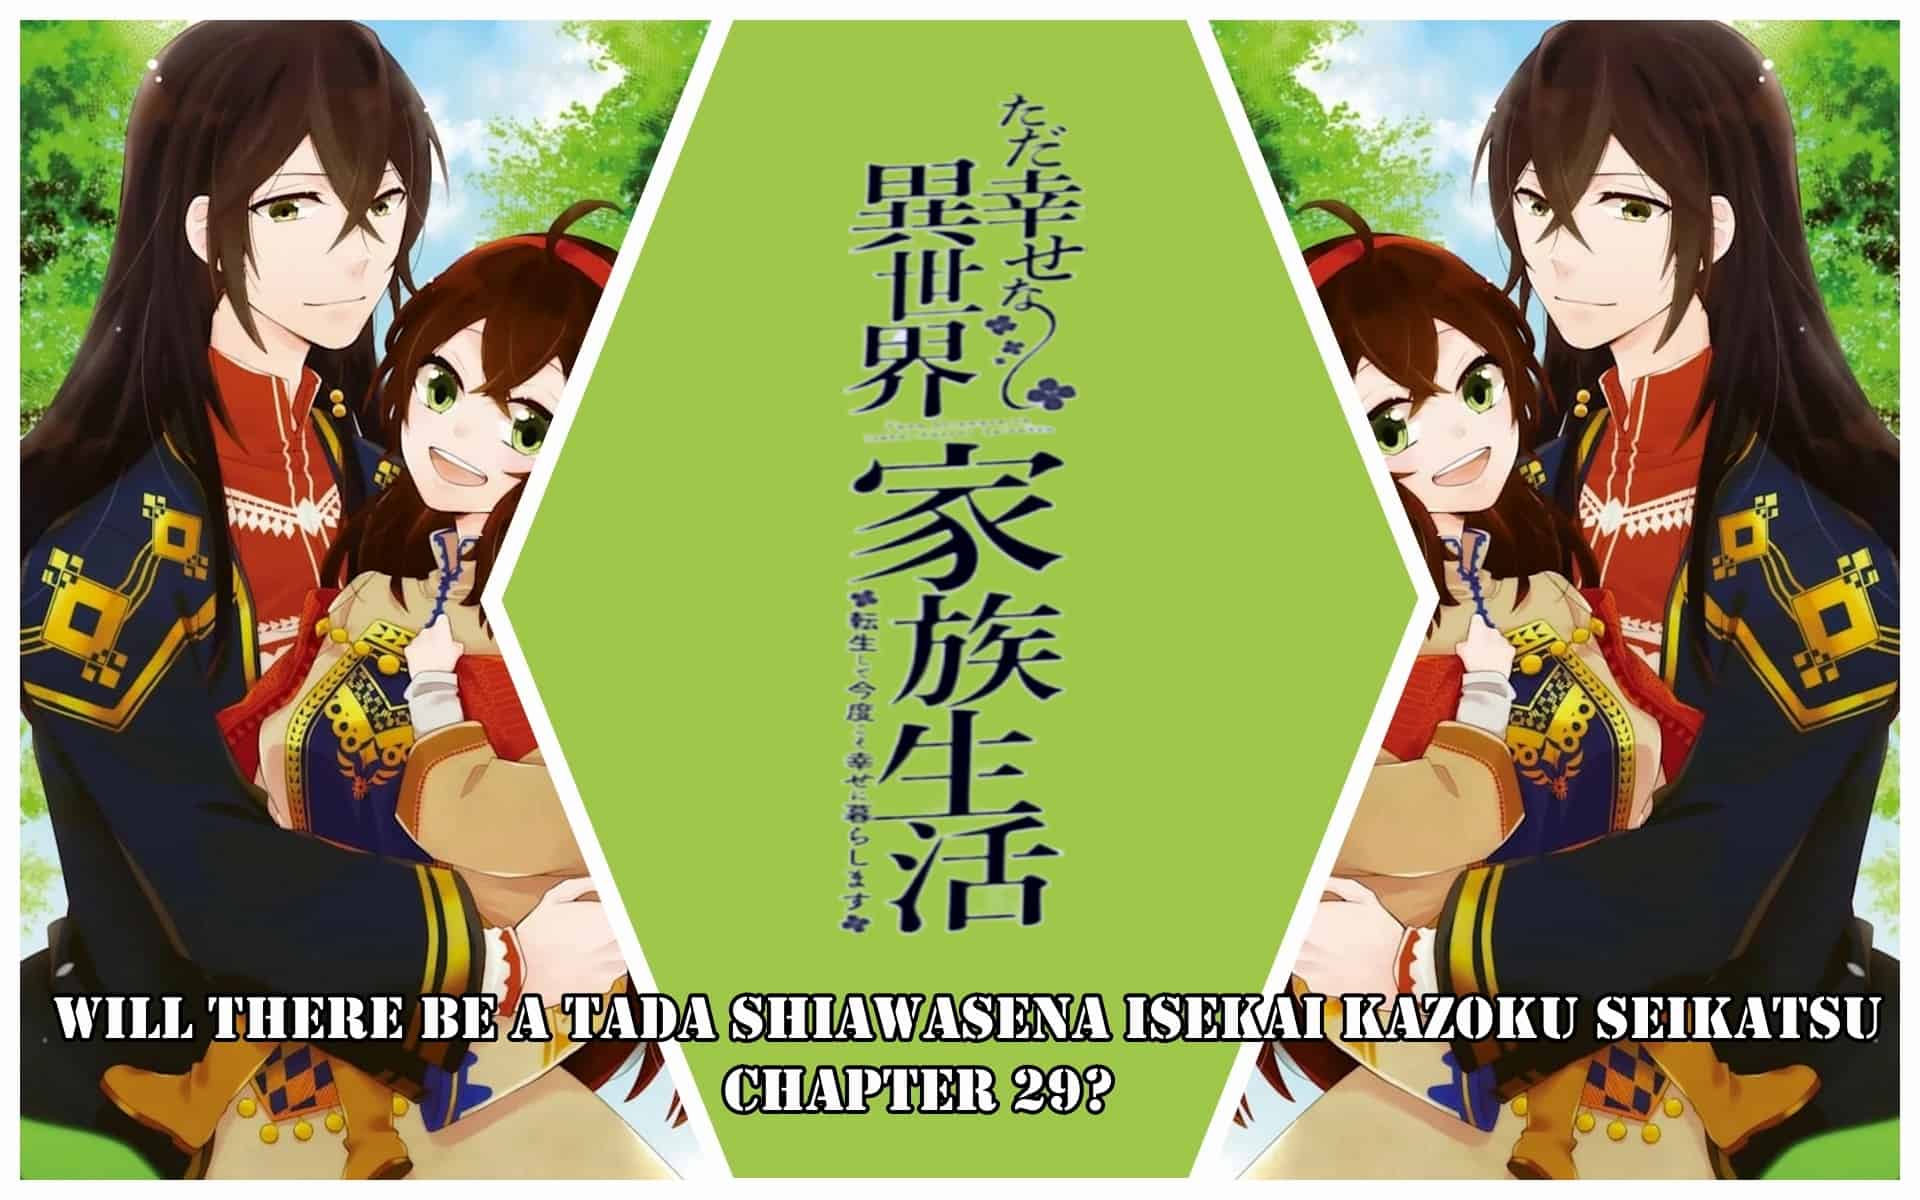 Will There Be A Tada Shiawasena Isekai Kazoku Seikatsu Chapter 29?